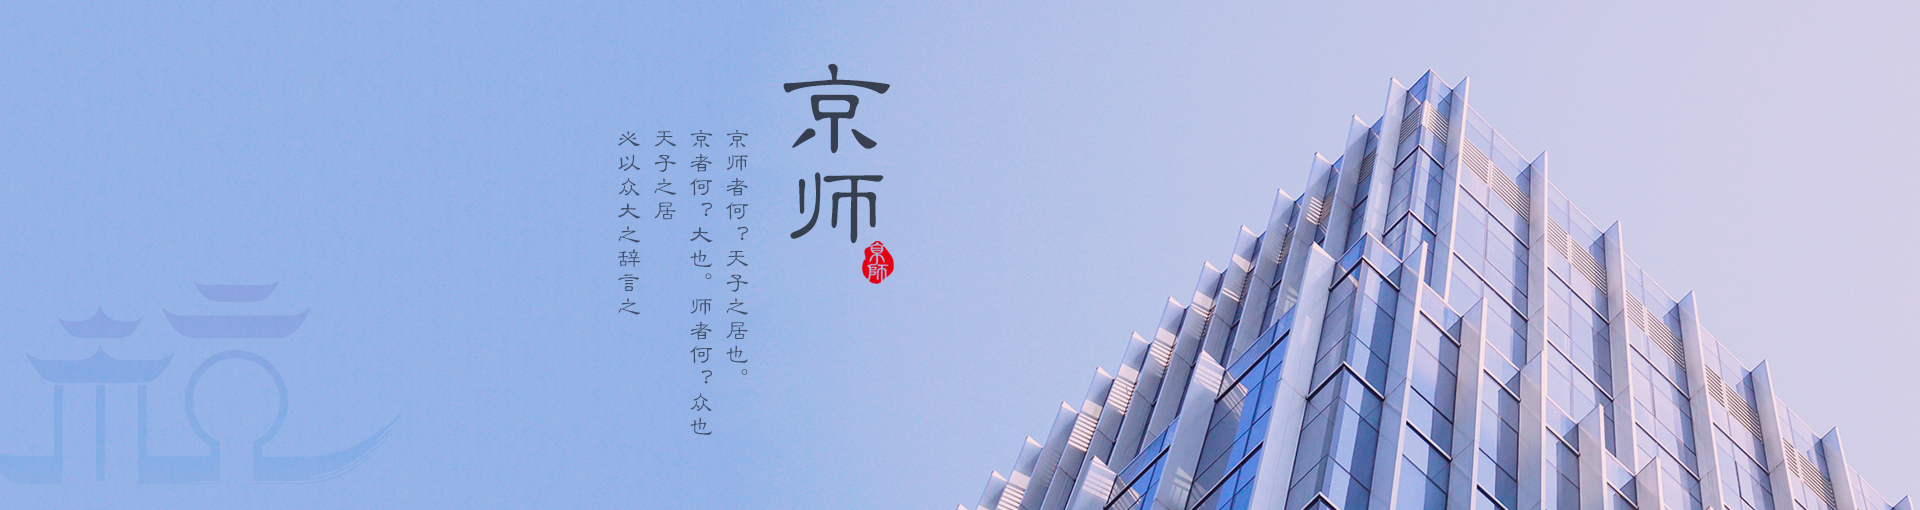 京师党建banner